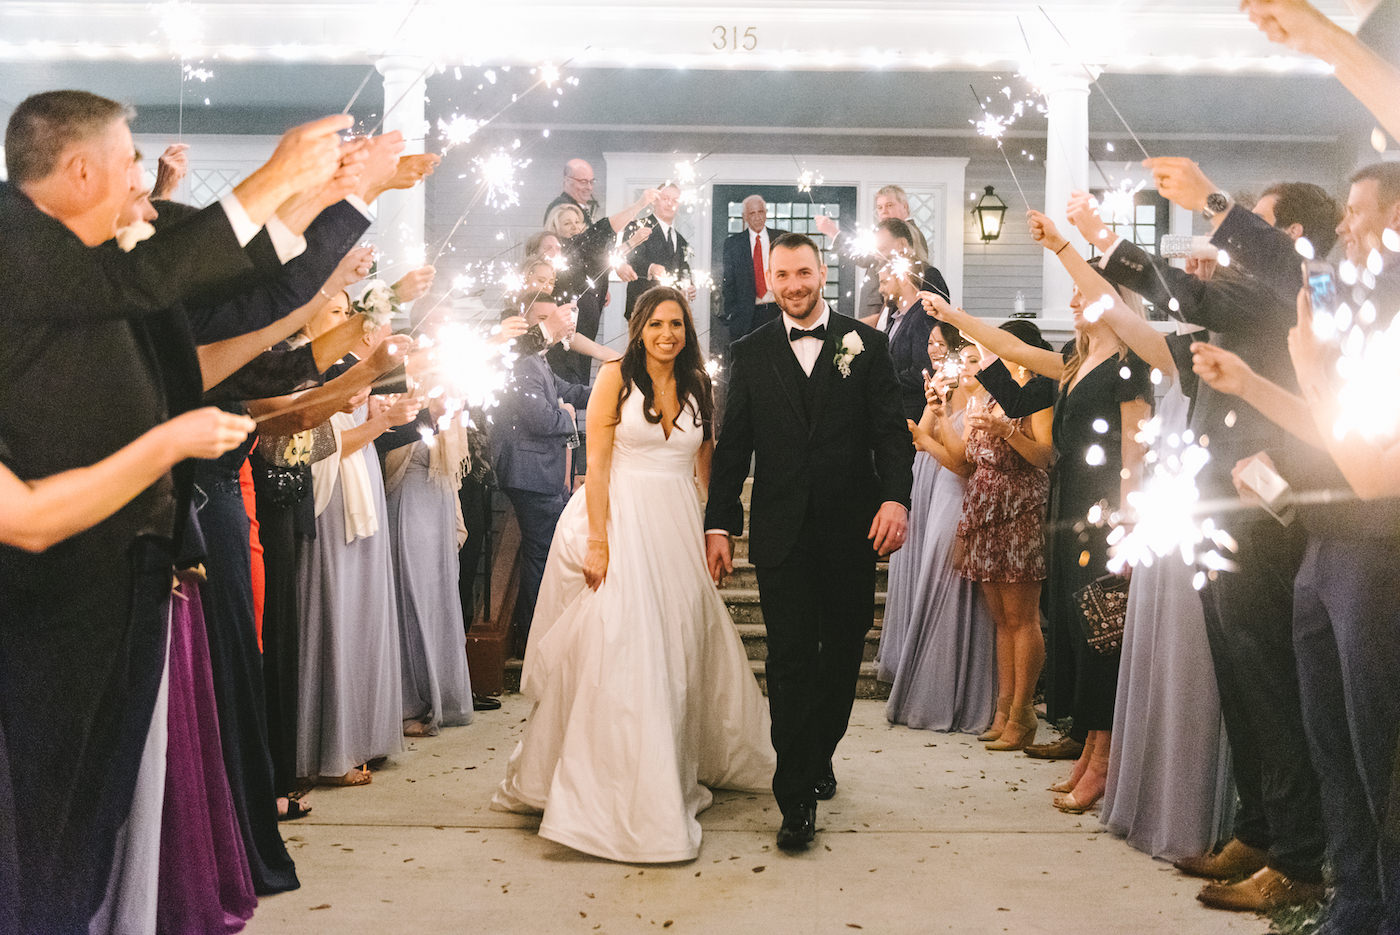 Classic Bride and Groom Sparkler Exit Wedding Reception | Tampa Bay Wedding Photographer Kera Photography